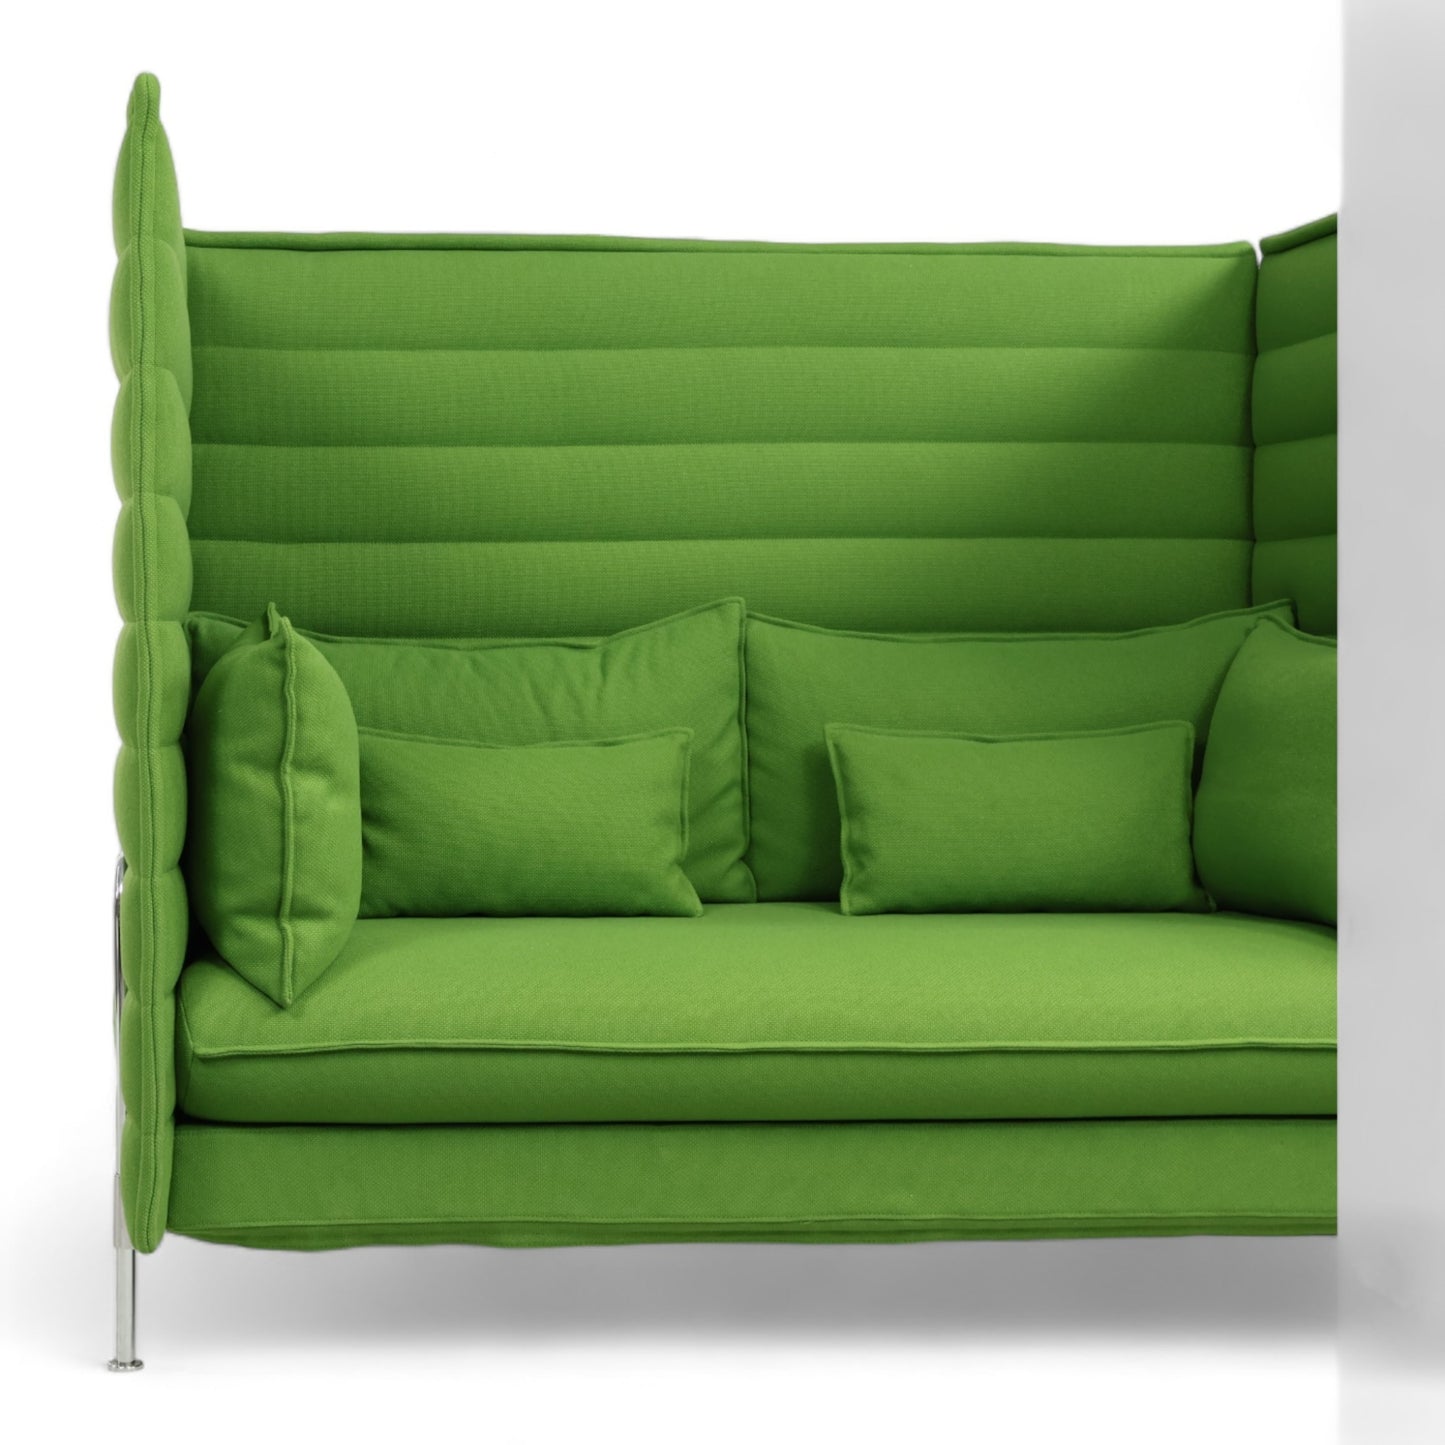 Nyrenset | Ronan & Erwan Bouroullec for Vitra alkove sofa